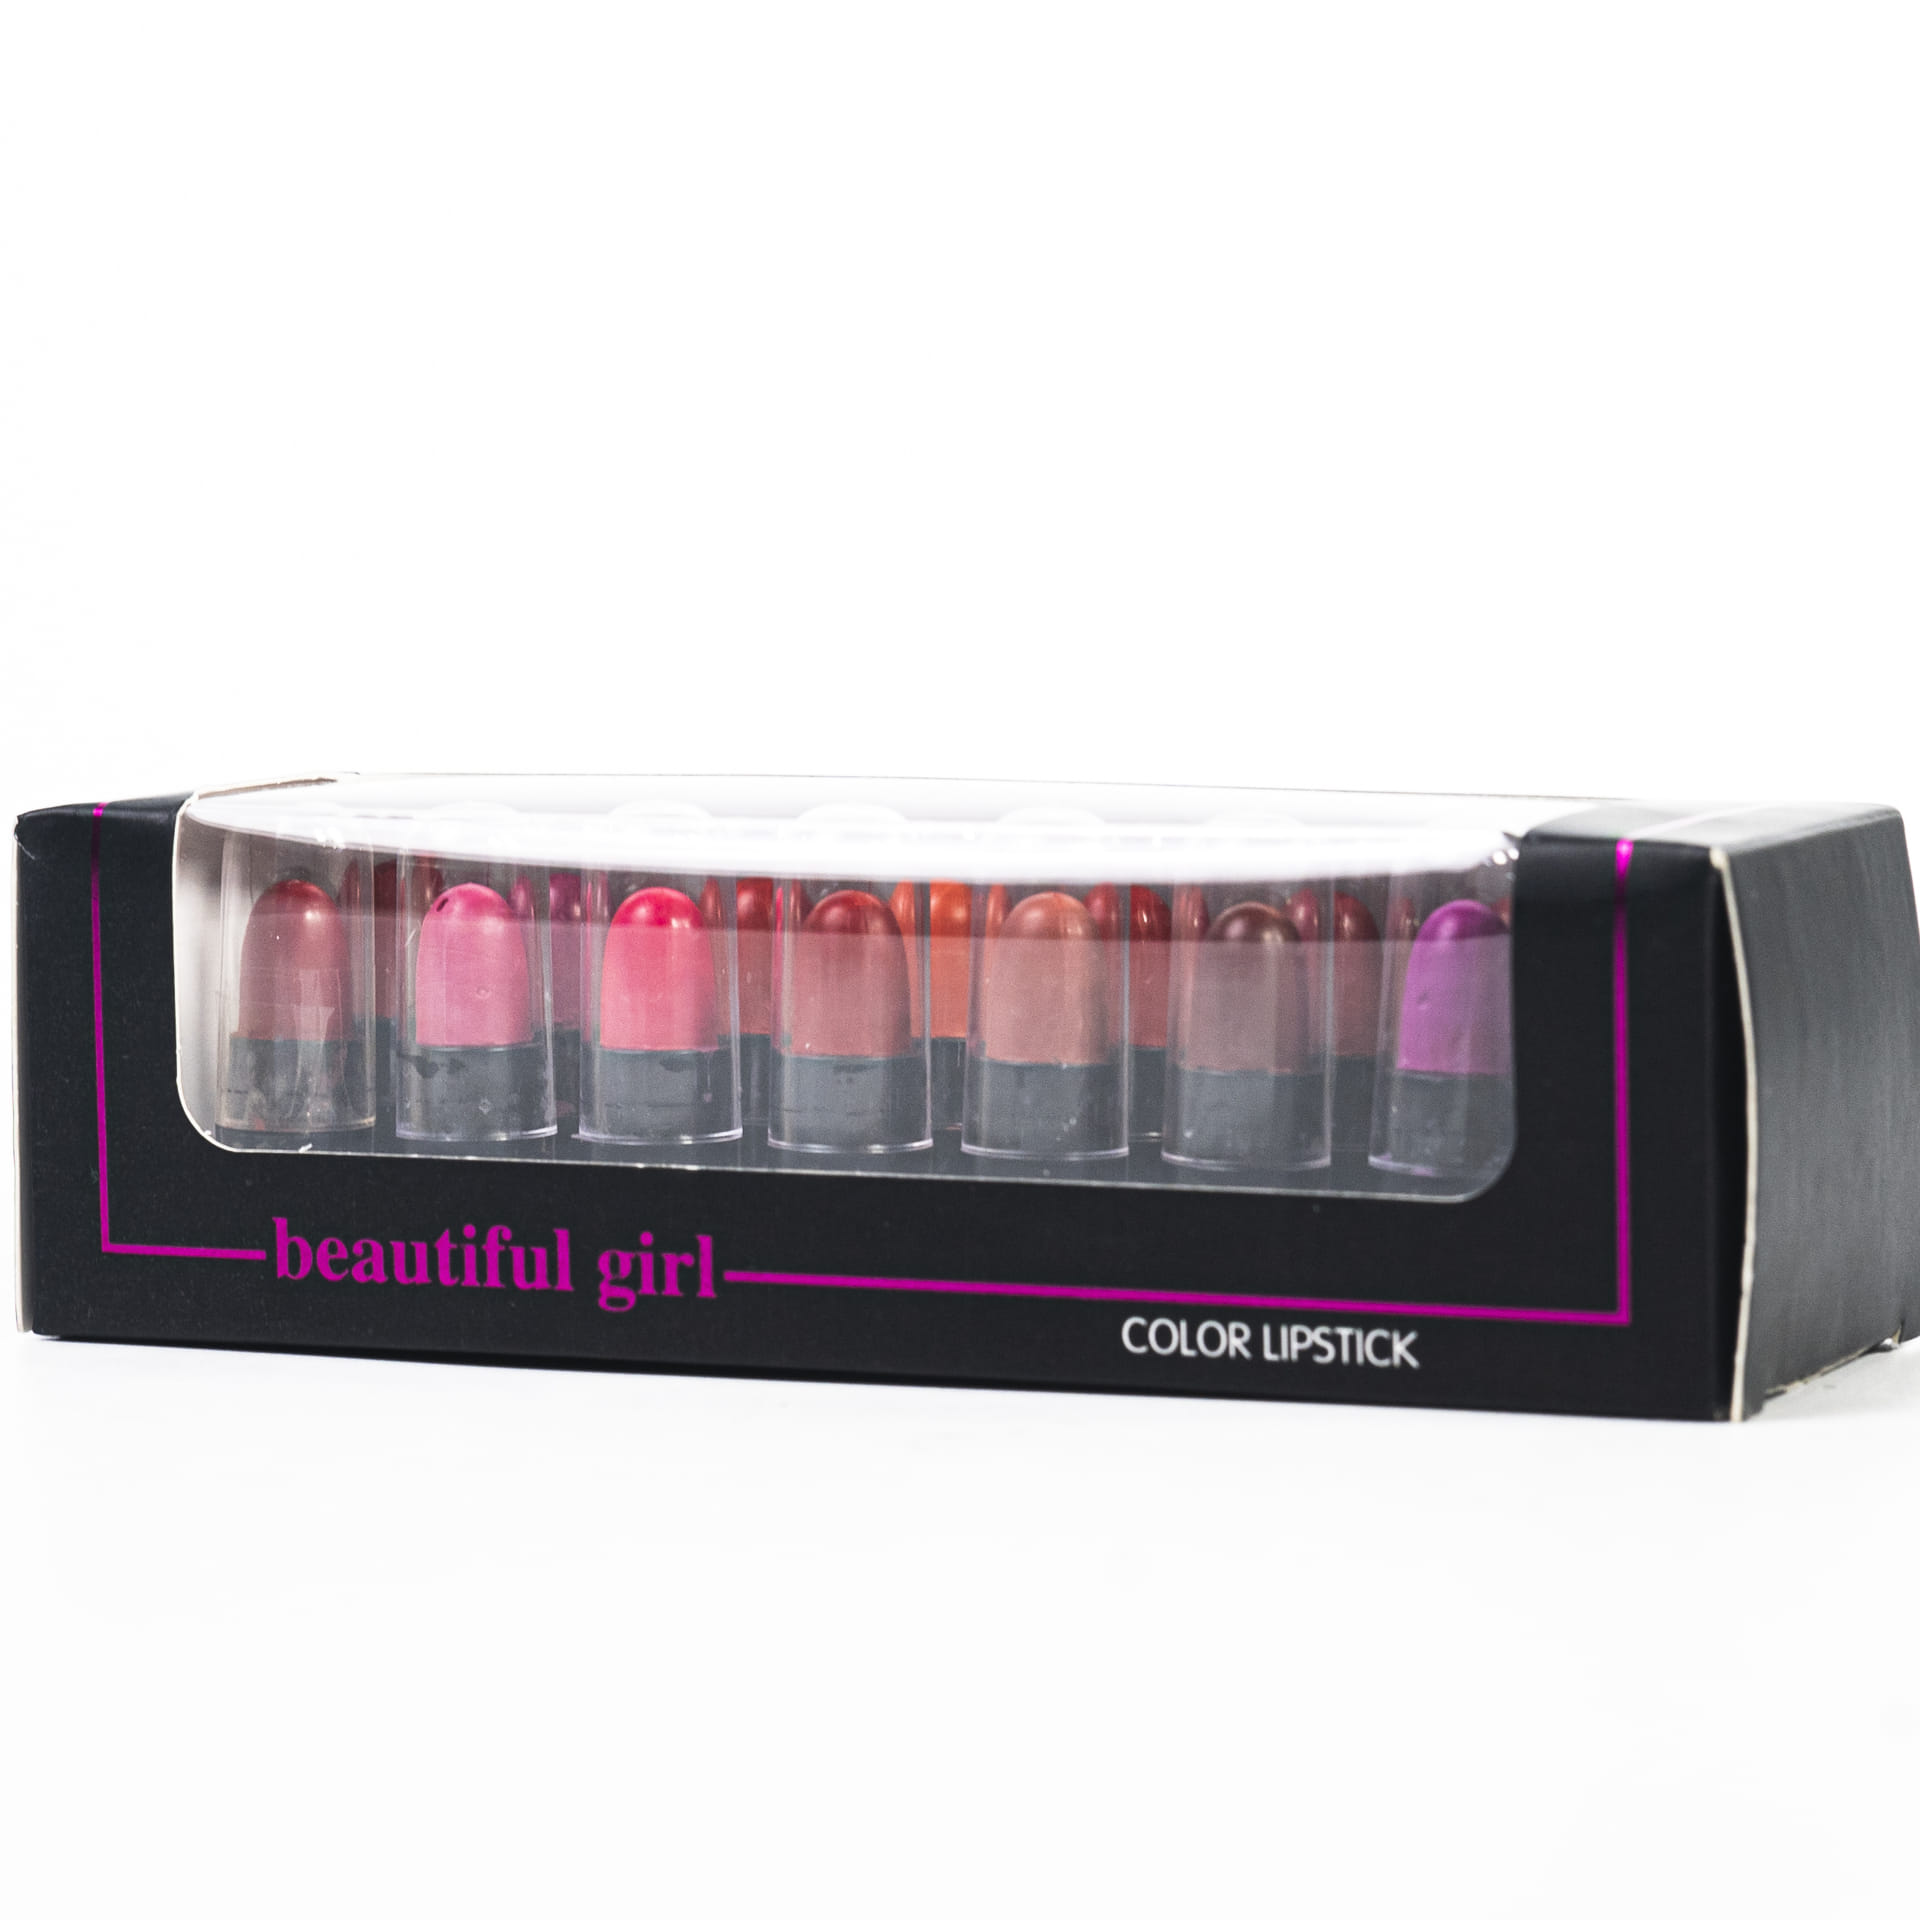 Box of 16 small lipsticks